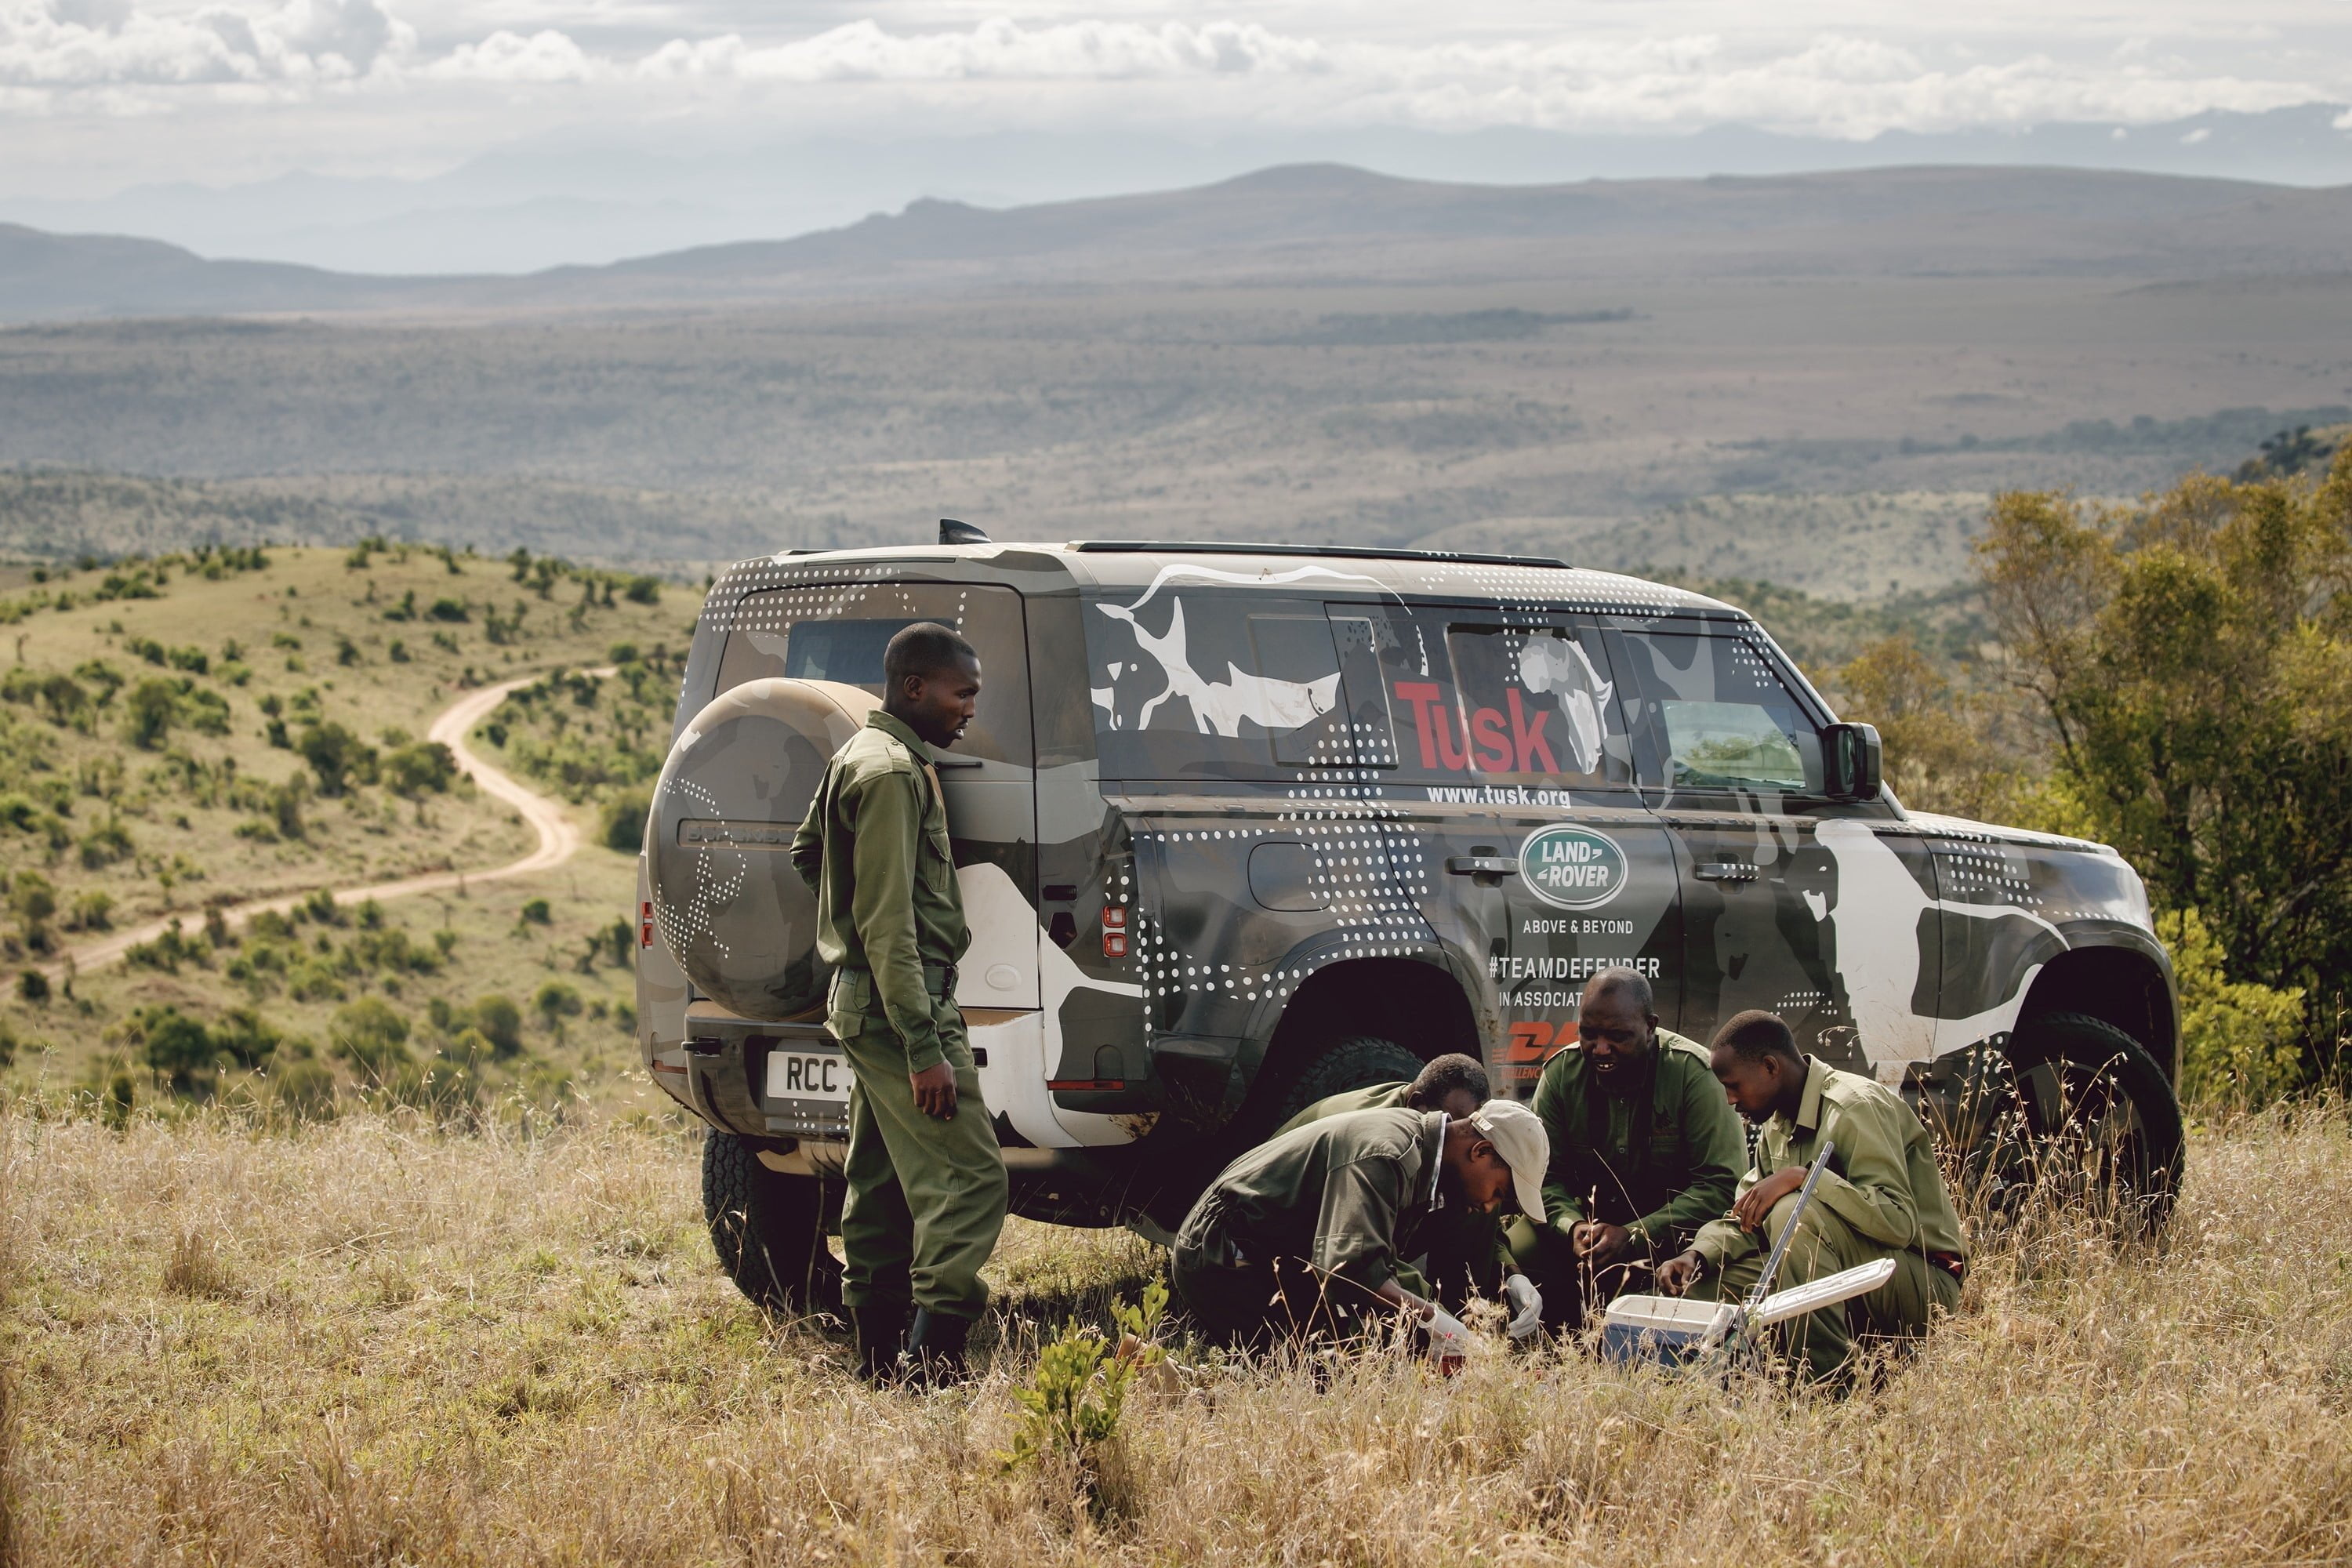 2019 Land Rover Defender Tusk testing Kenya 1